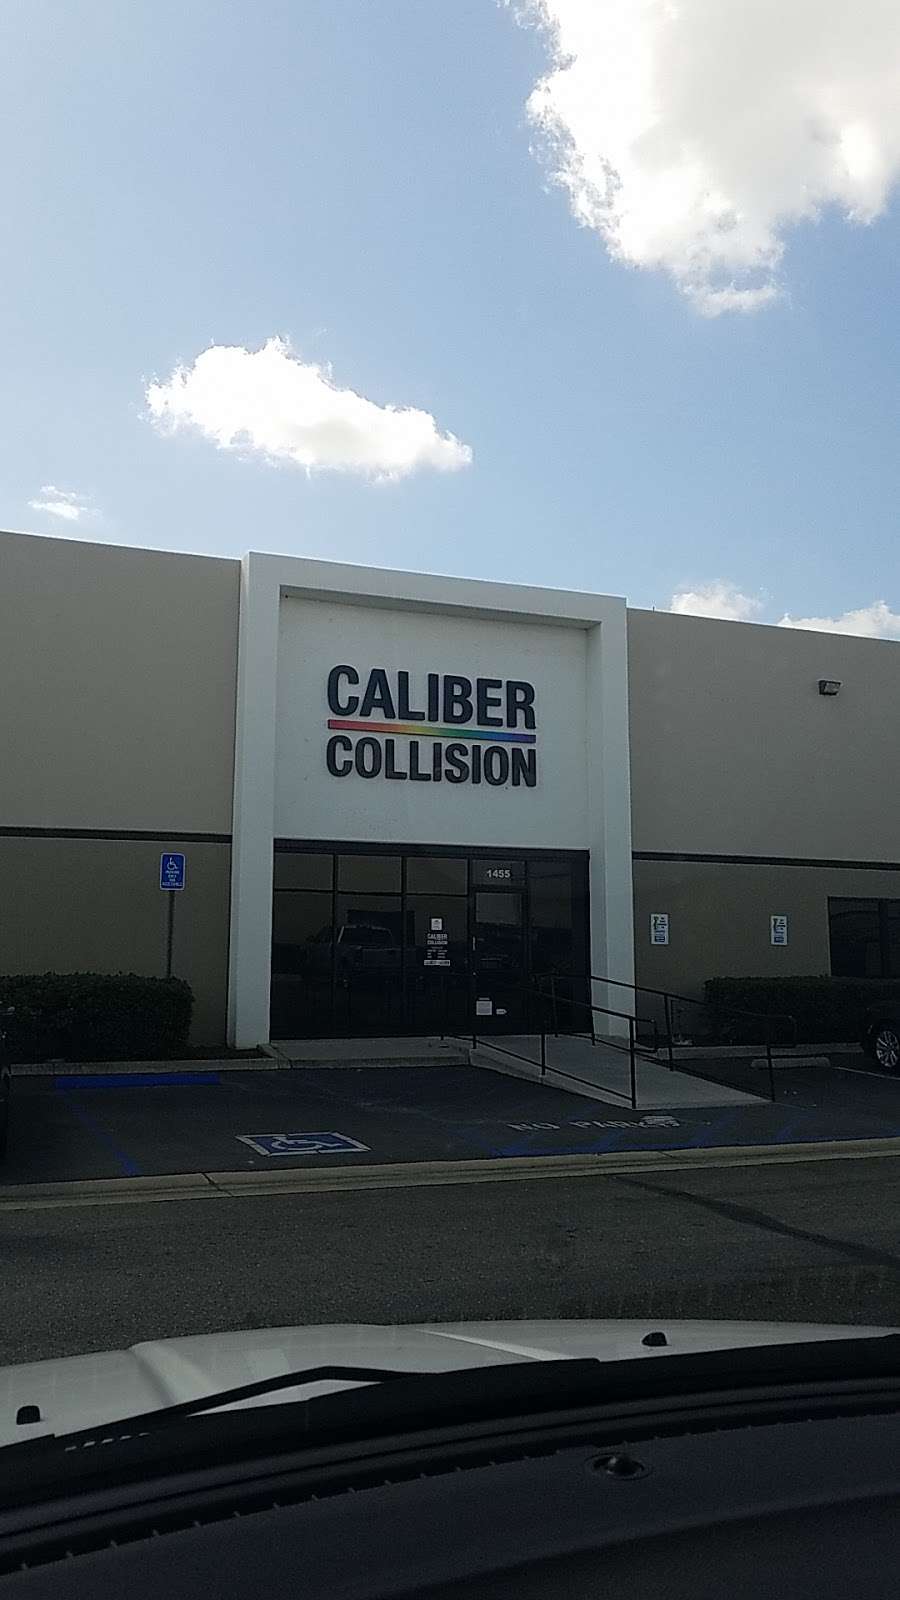 Caliber Collision | 1455 S Cucamonga Ave, Ontario, CA 91761 | Phone: (909) 673-1090